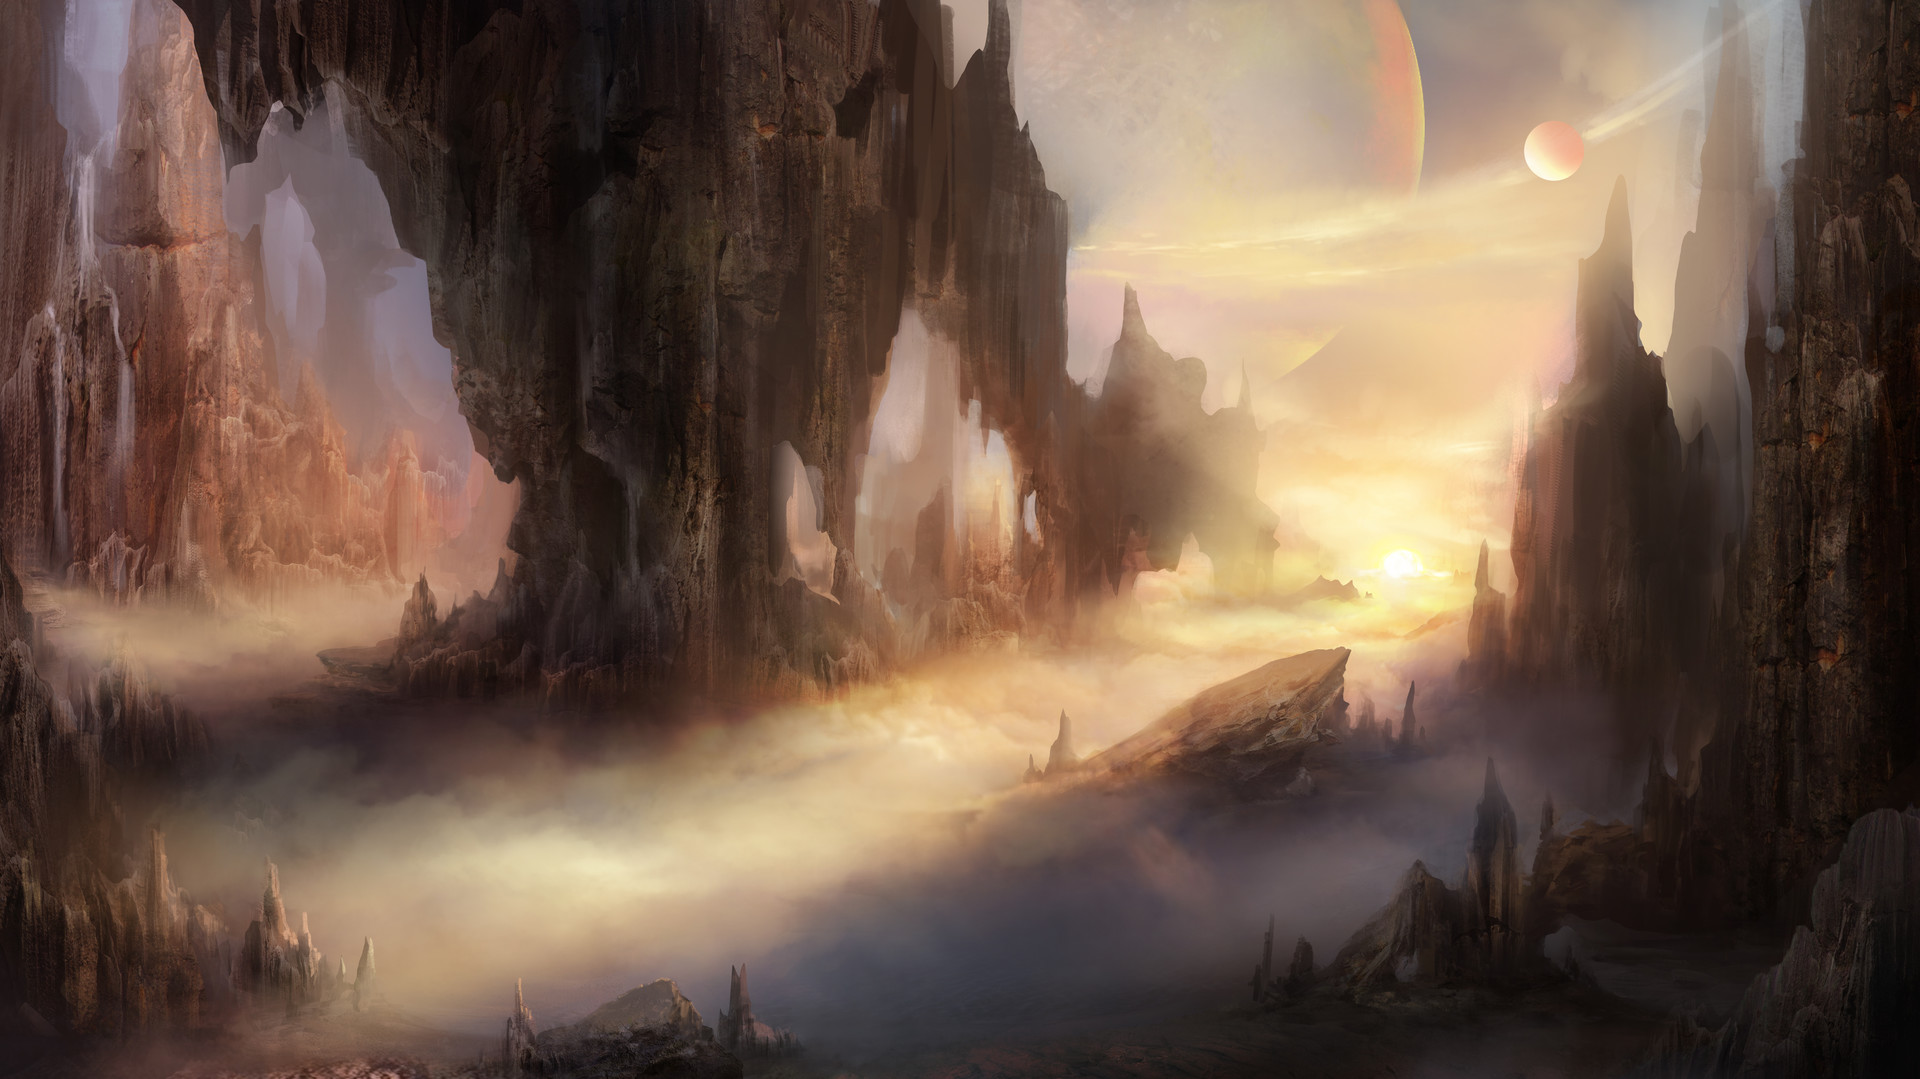 Download Planet Sci Fi Landscape Wallpaper by Sergey Zimmer